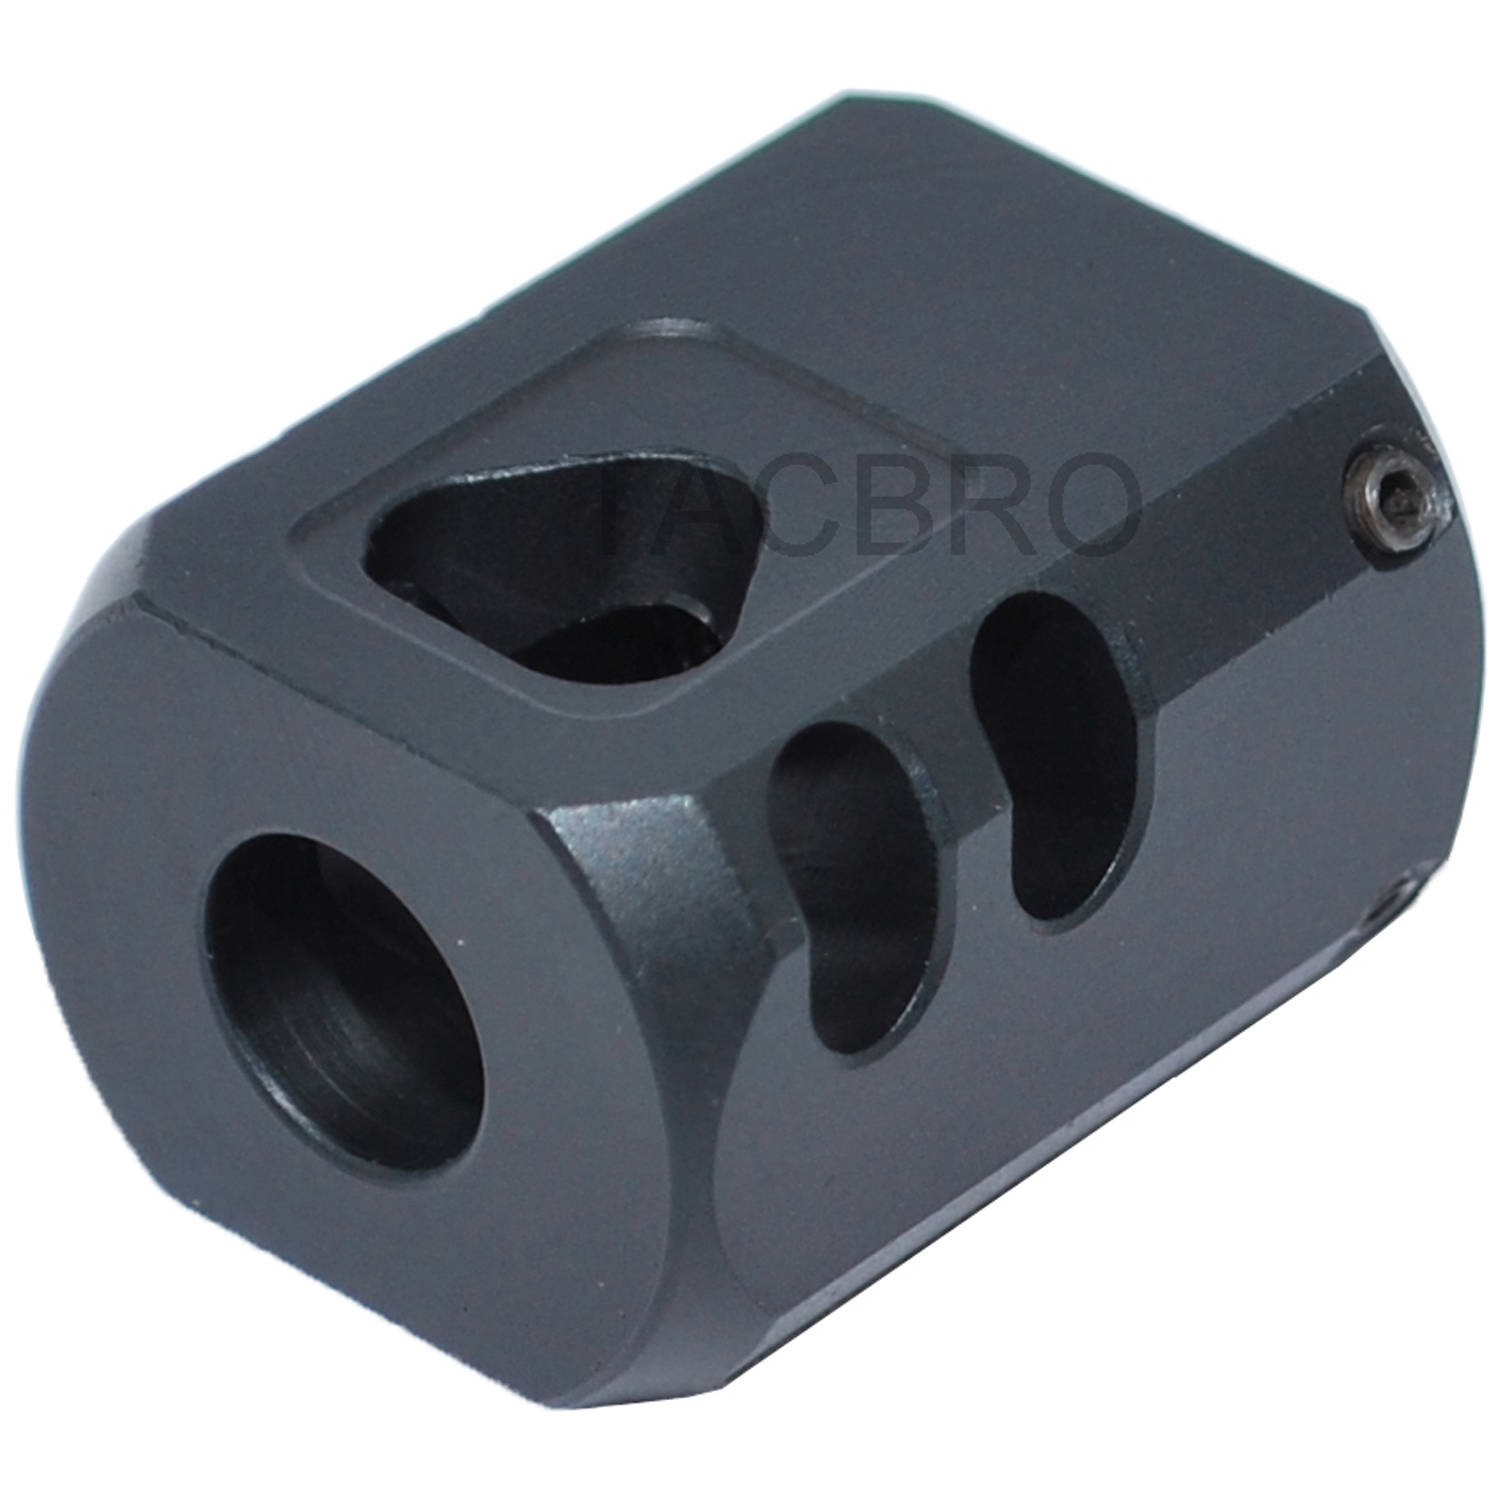 Muzzle Brake Glock /& Other 9mm compensator 1//2x28 .